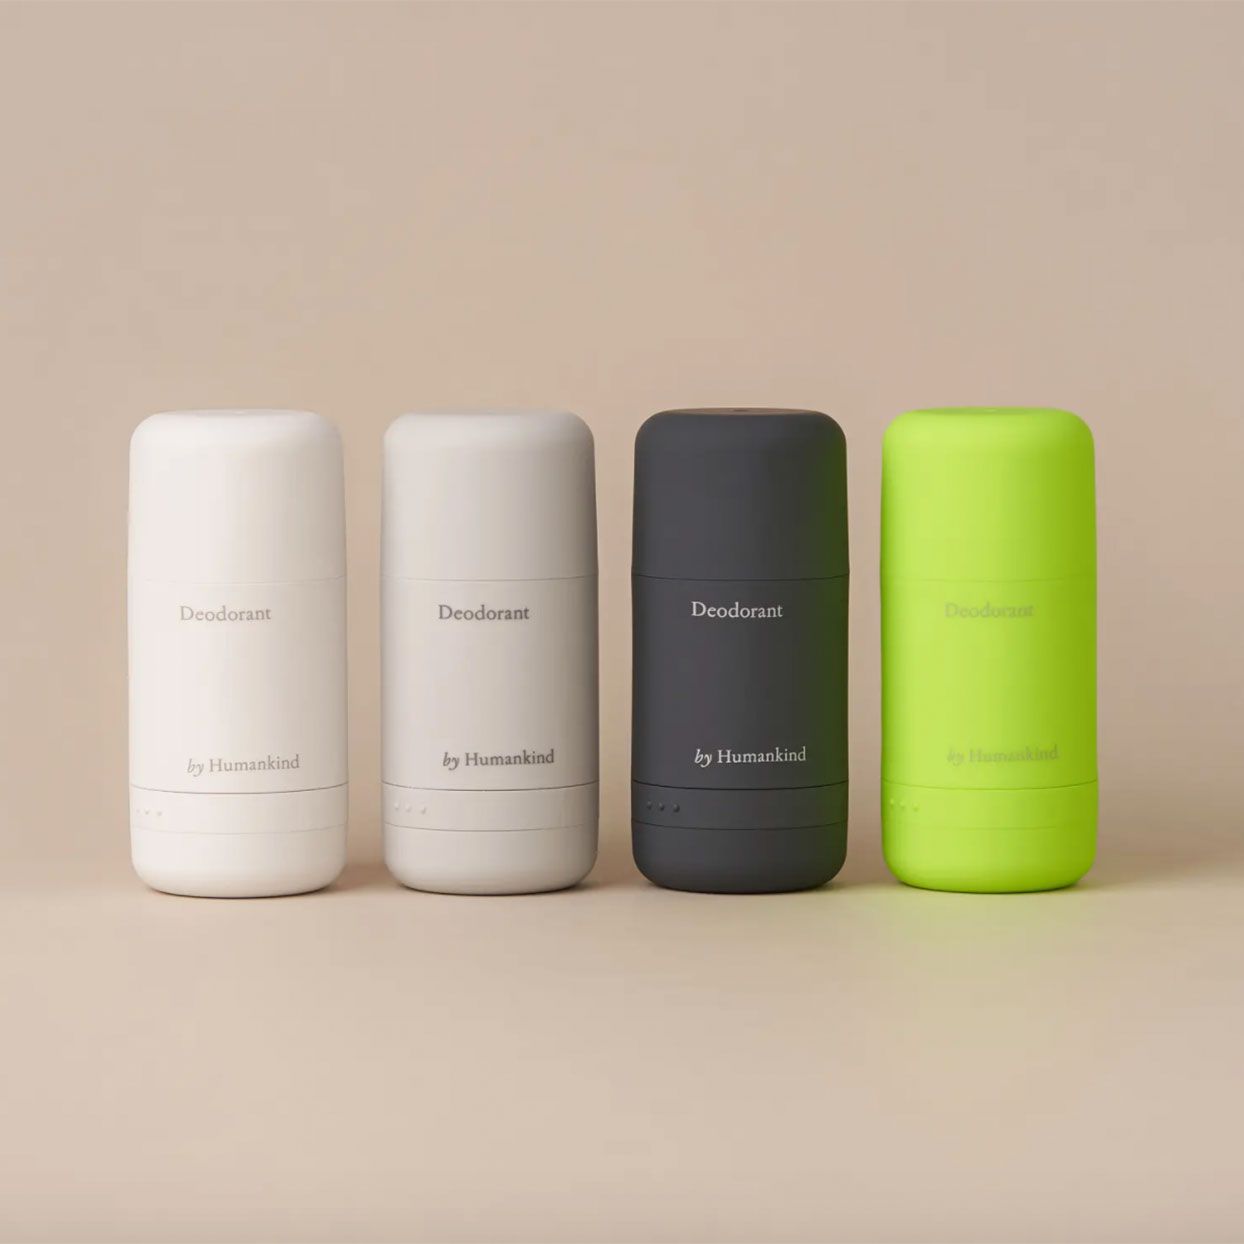 by-humankind-deodorant-zero-waste-refillable